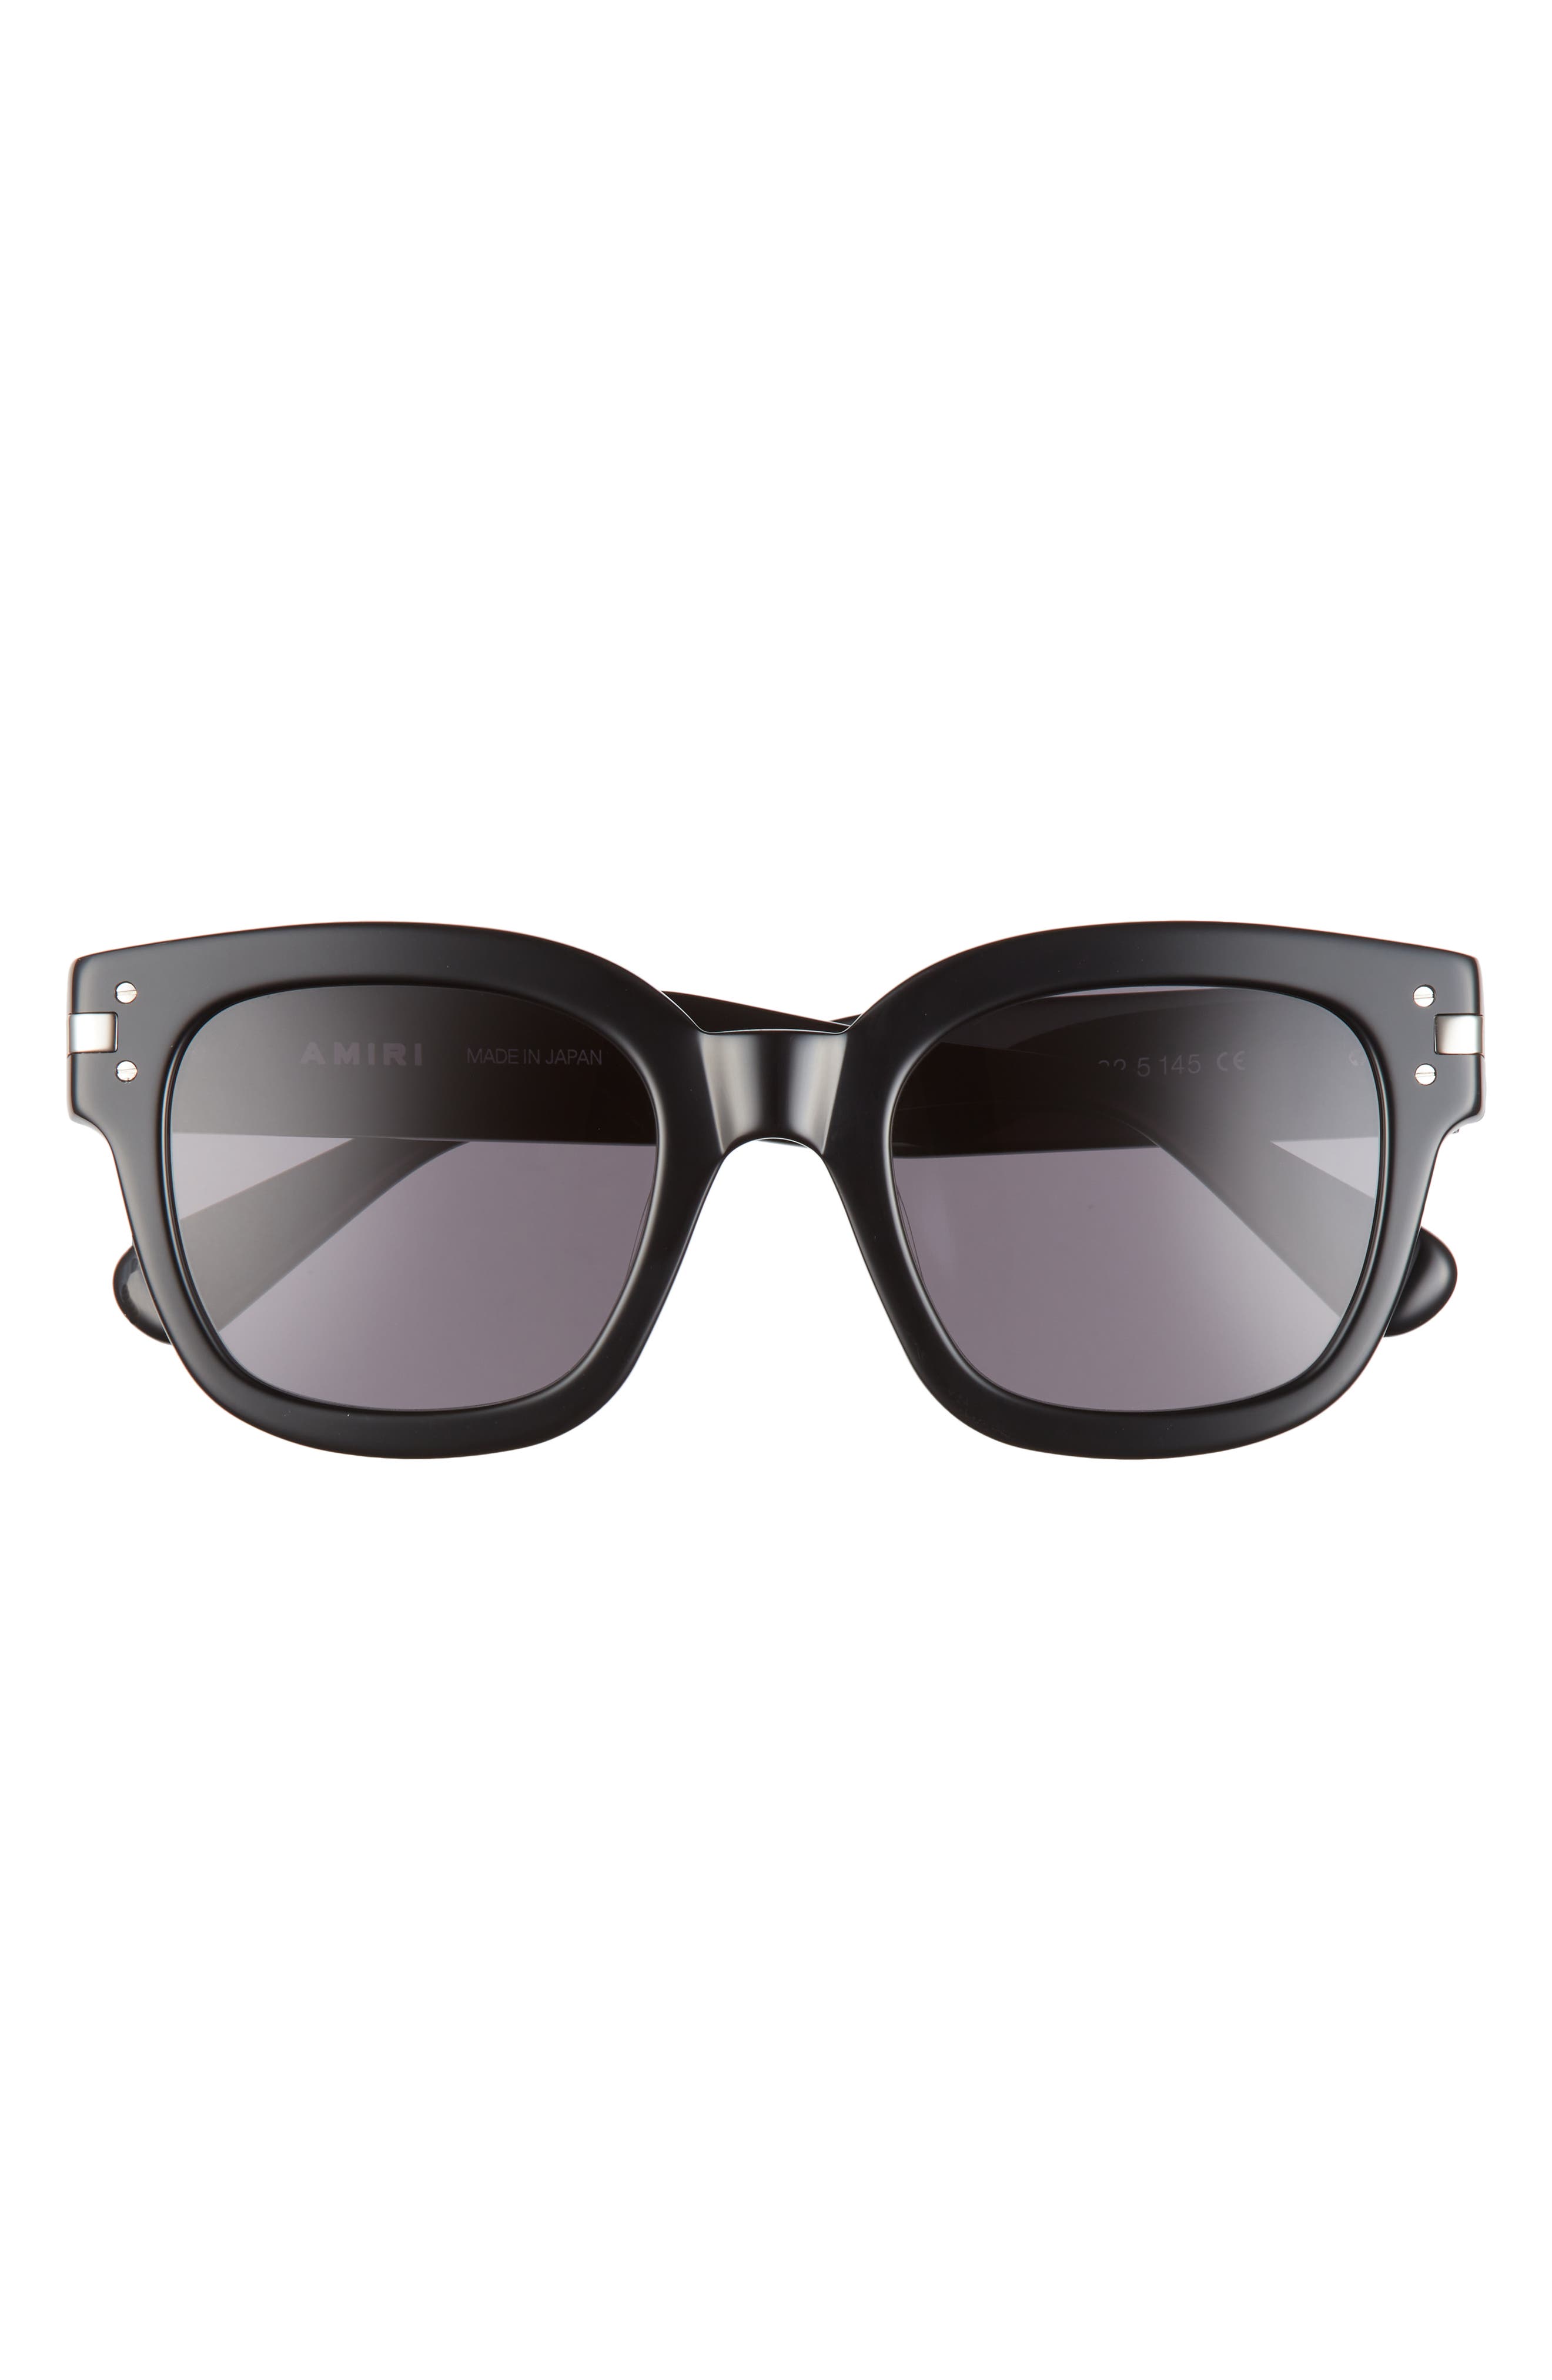 AMIRI Classic Logo Square Sunglasses in Black at Nordstrom